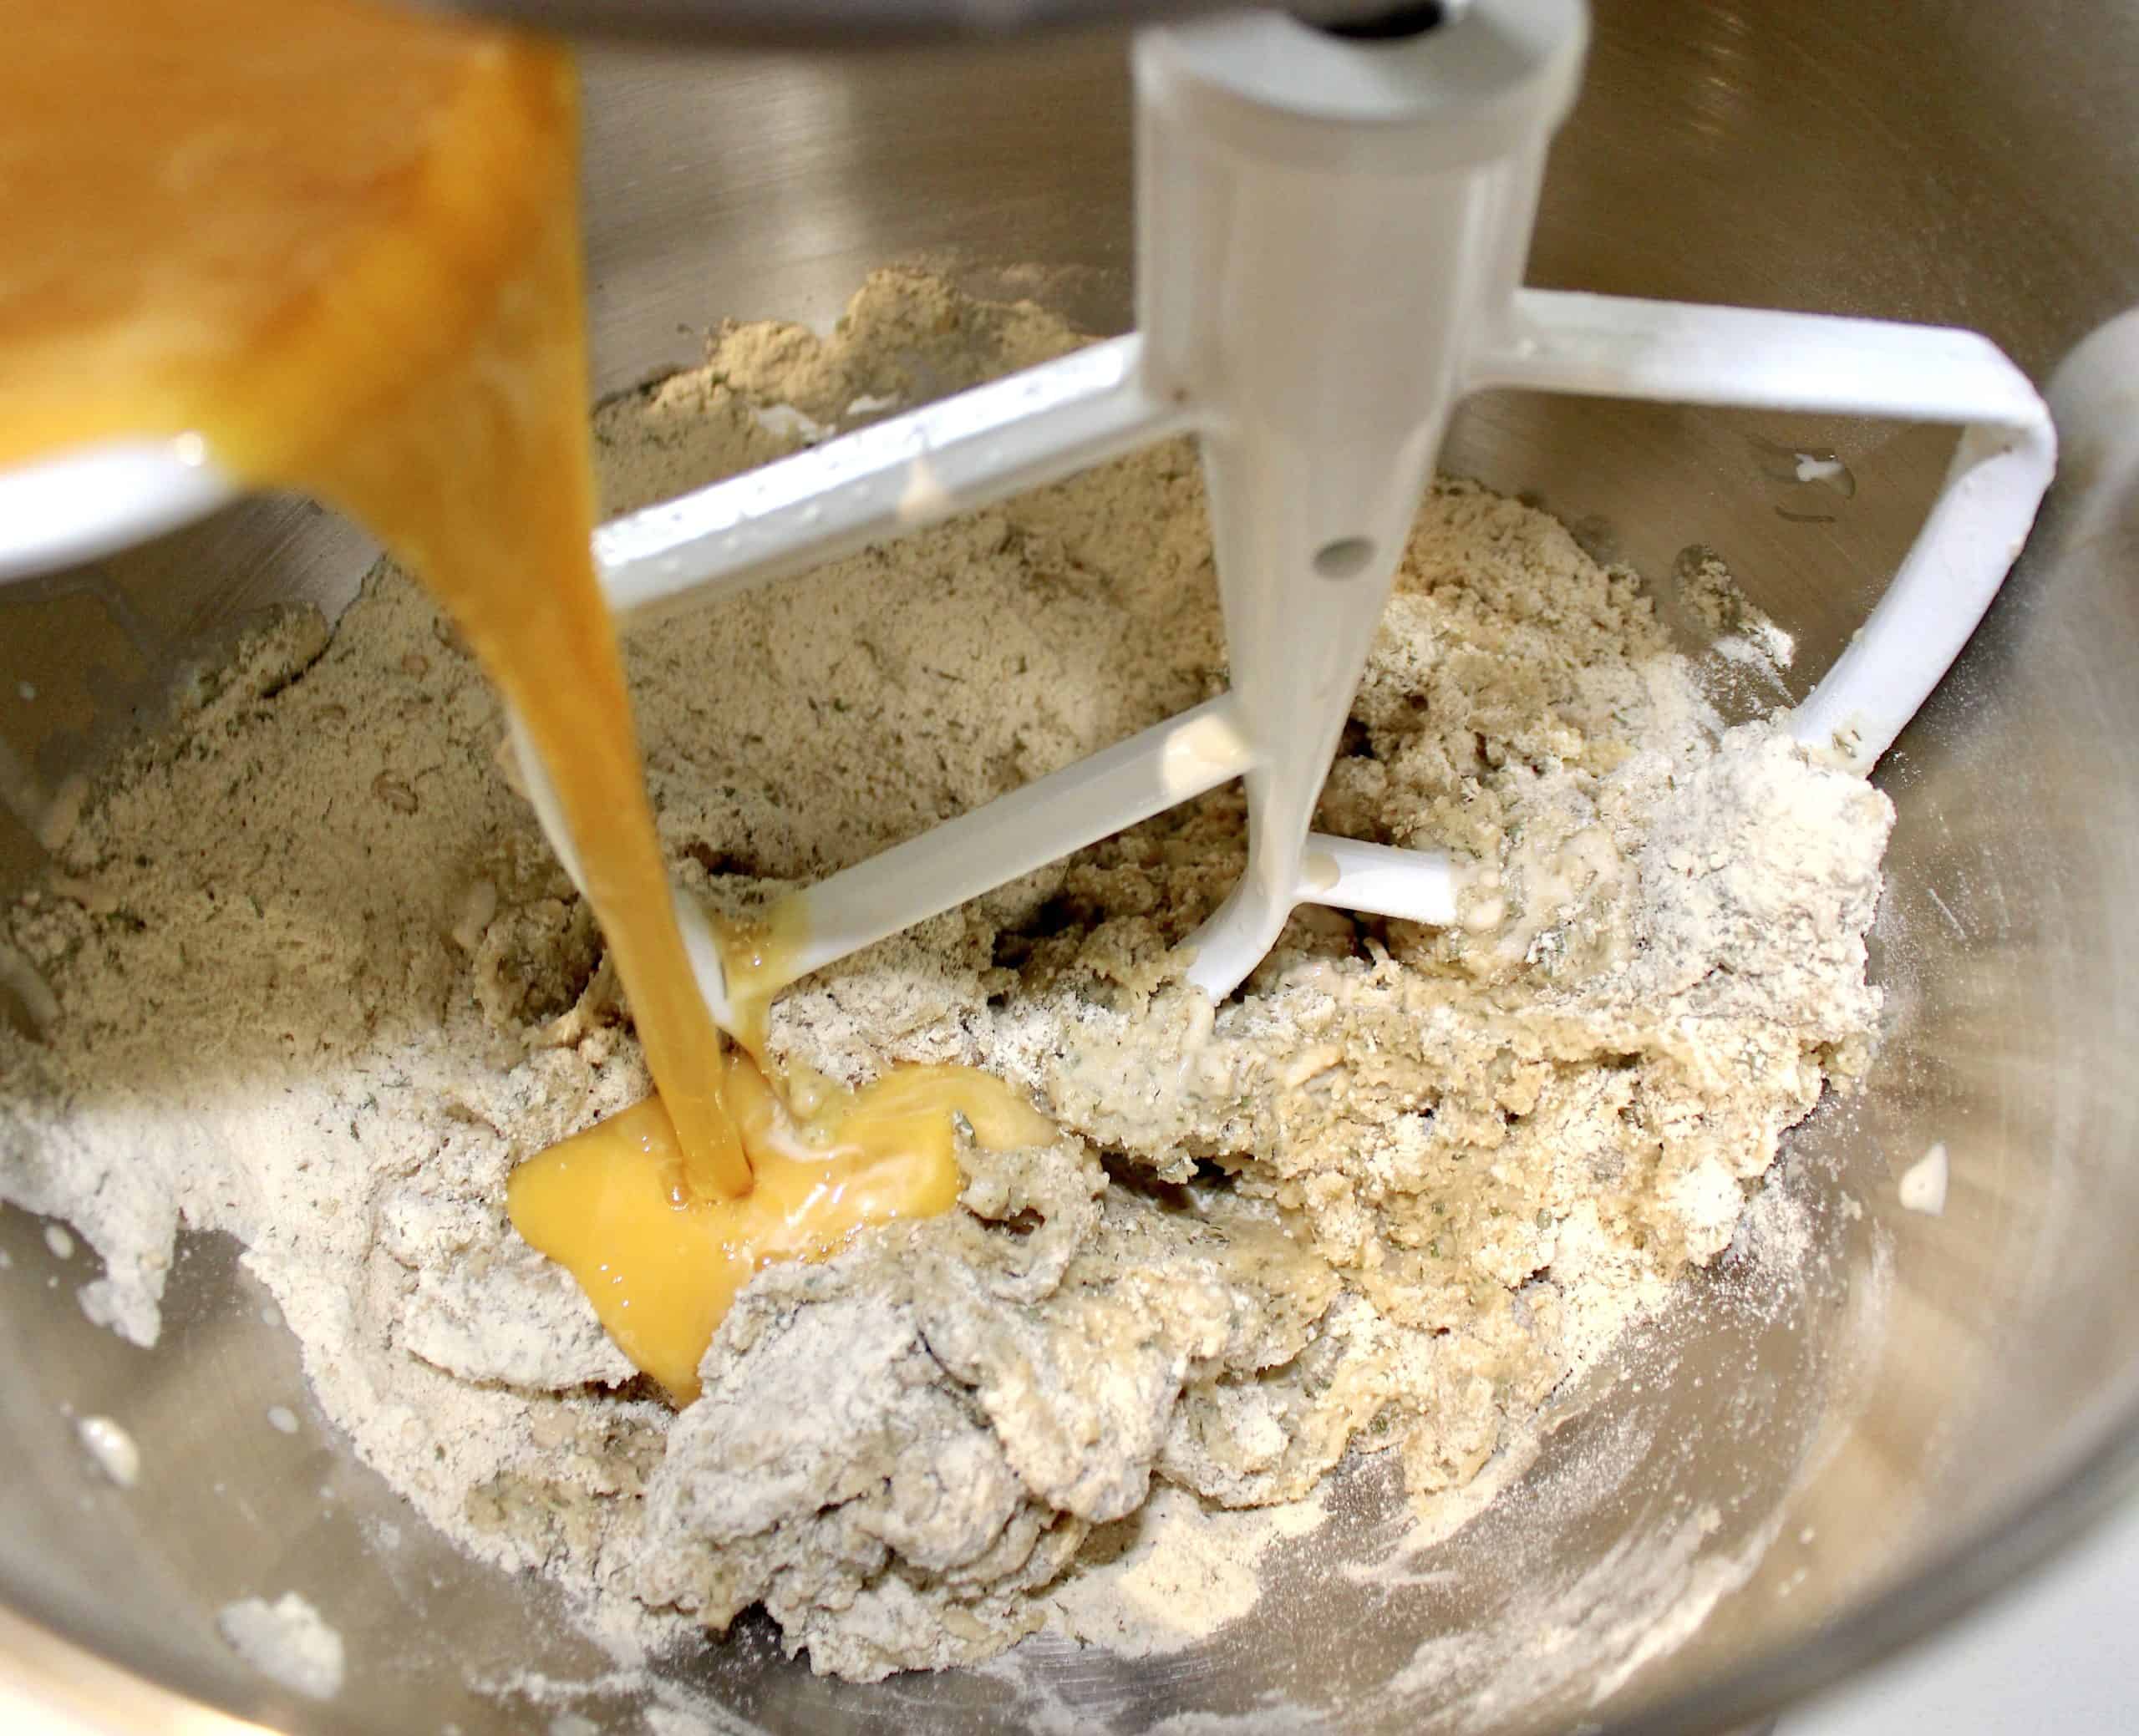 beaten eggs being poured into dough mixture